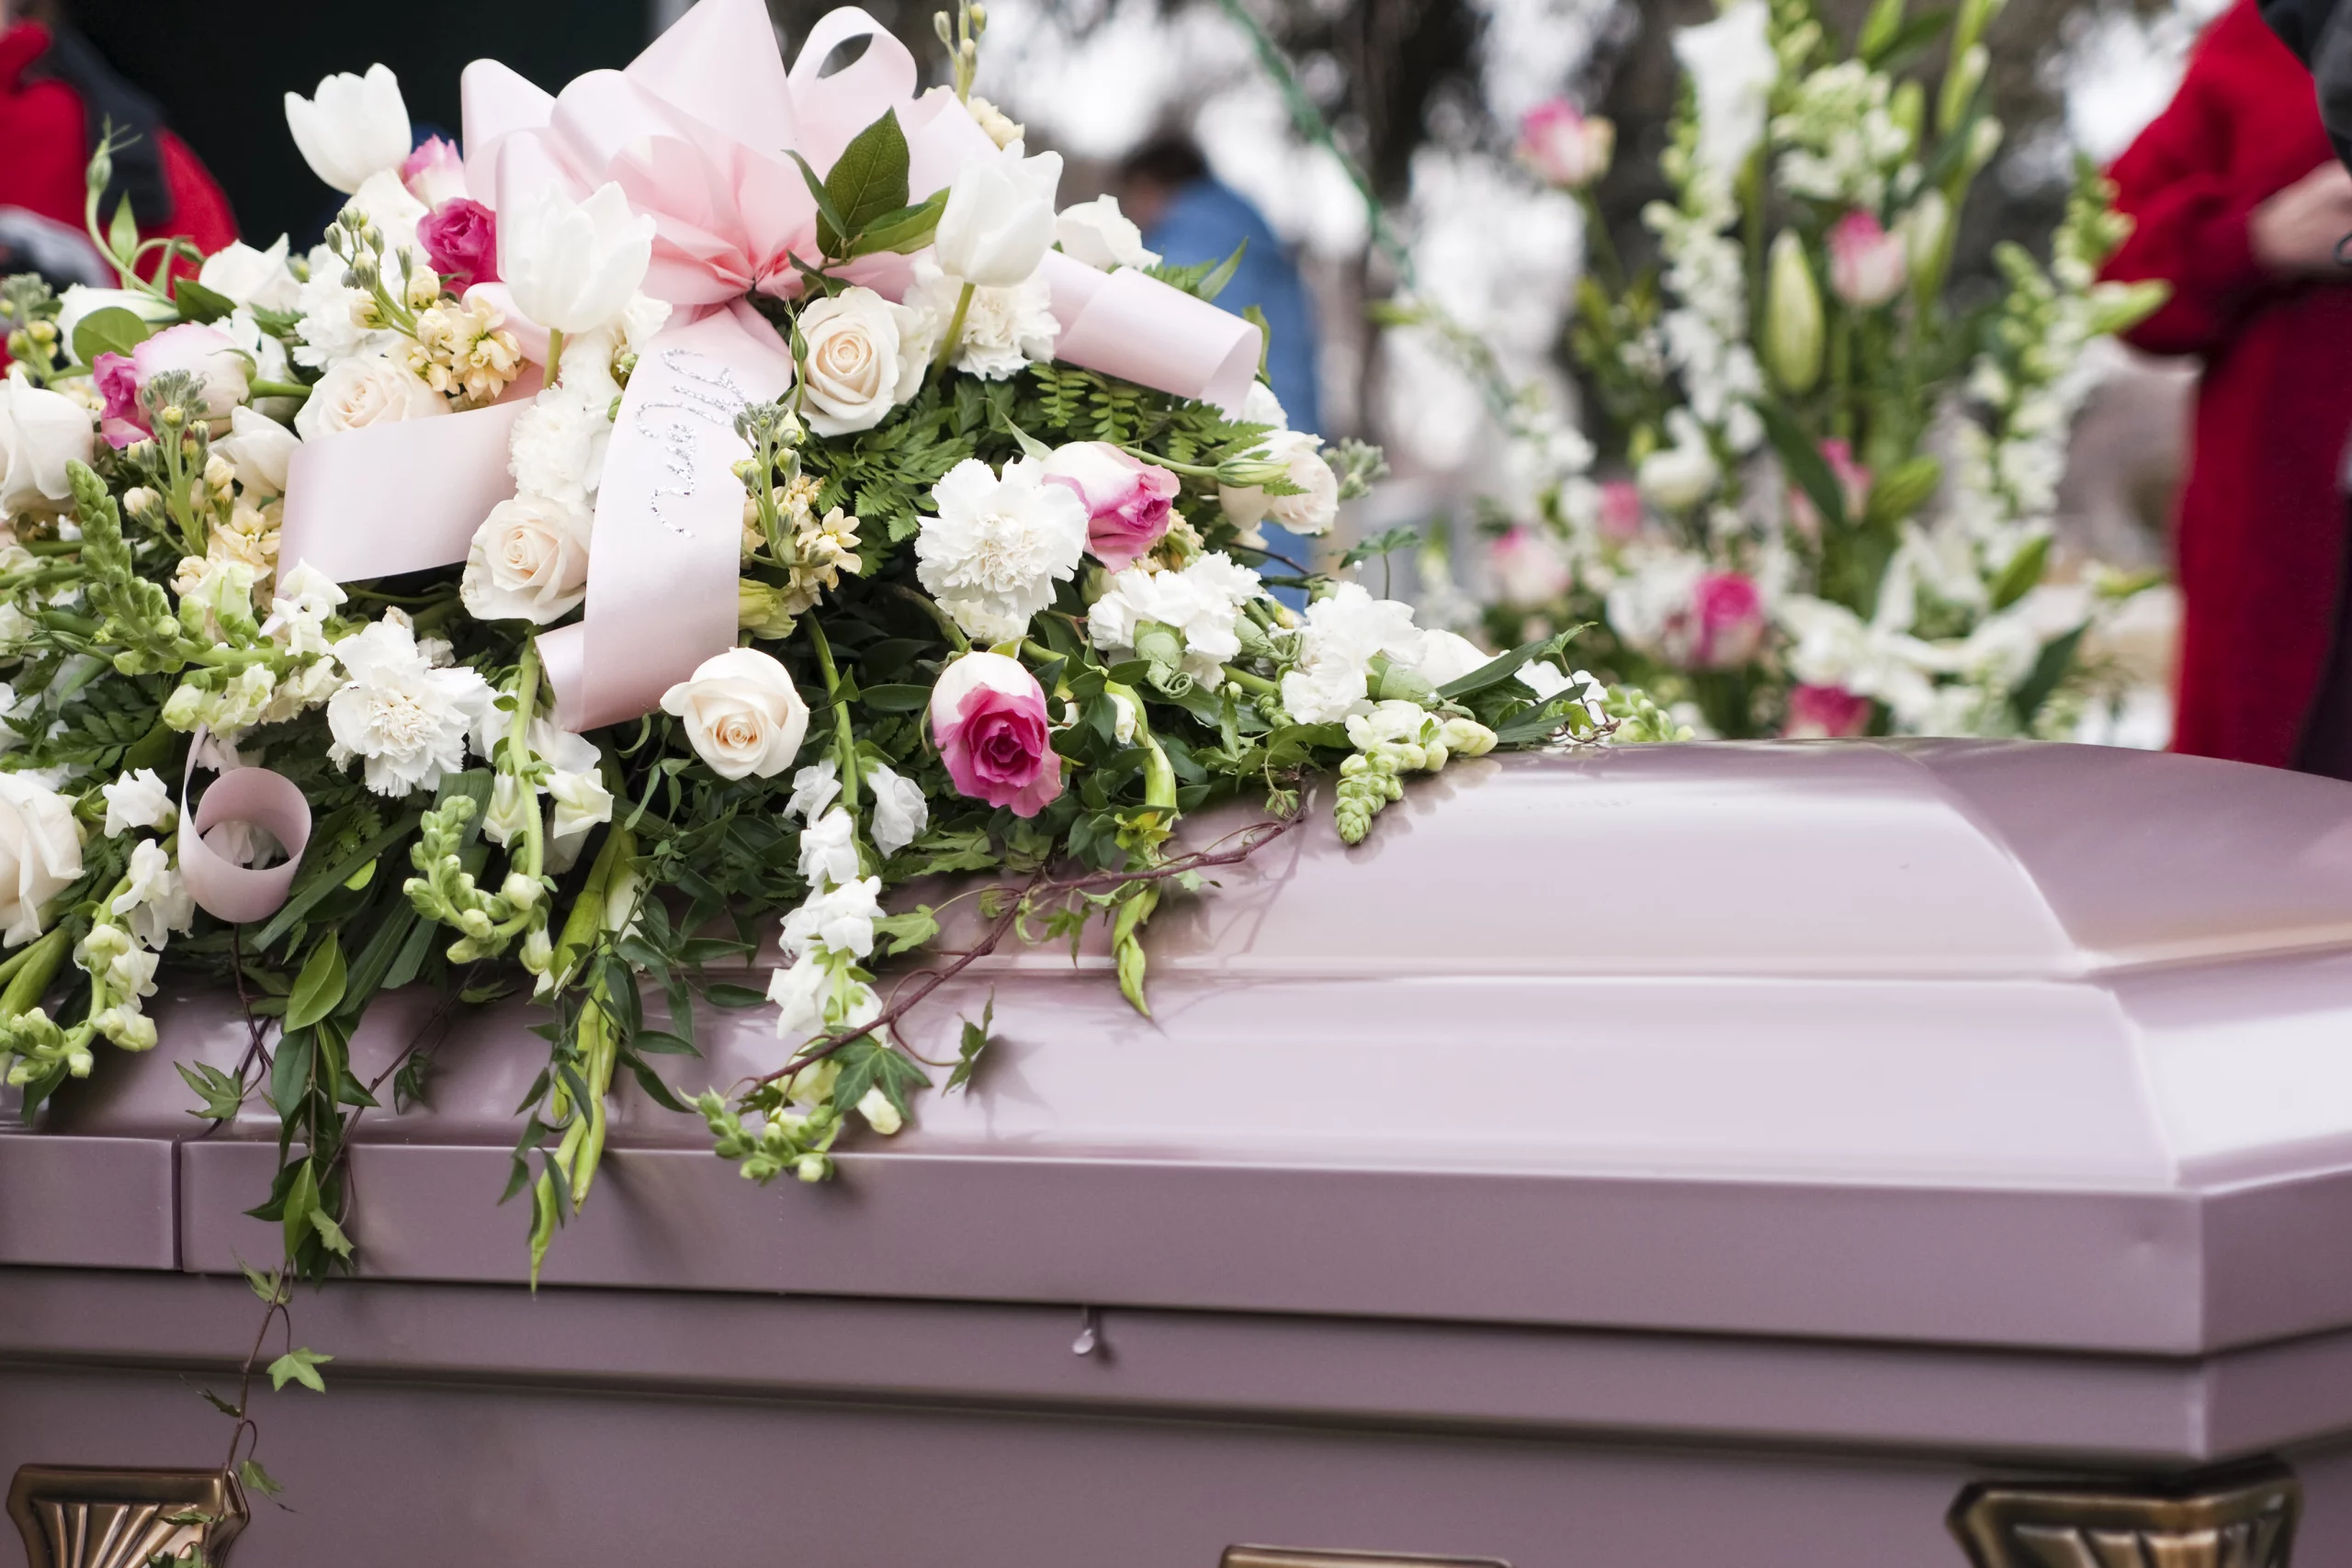 Funeral Flowers singapore - https://beato.com.sg/